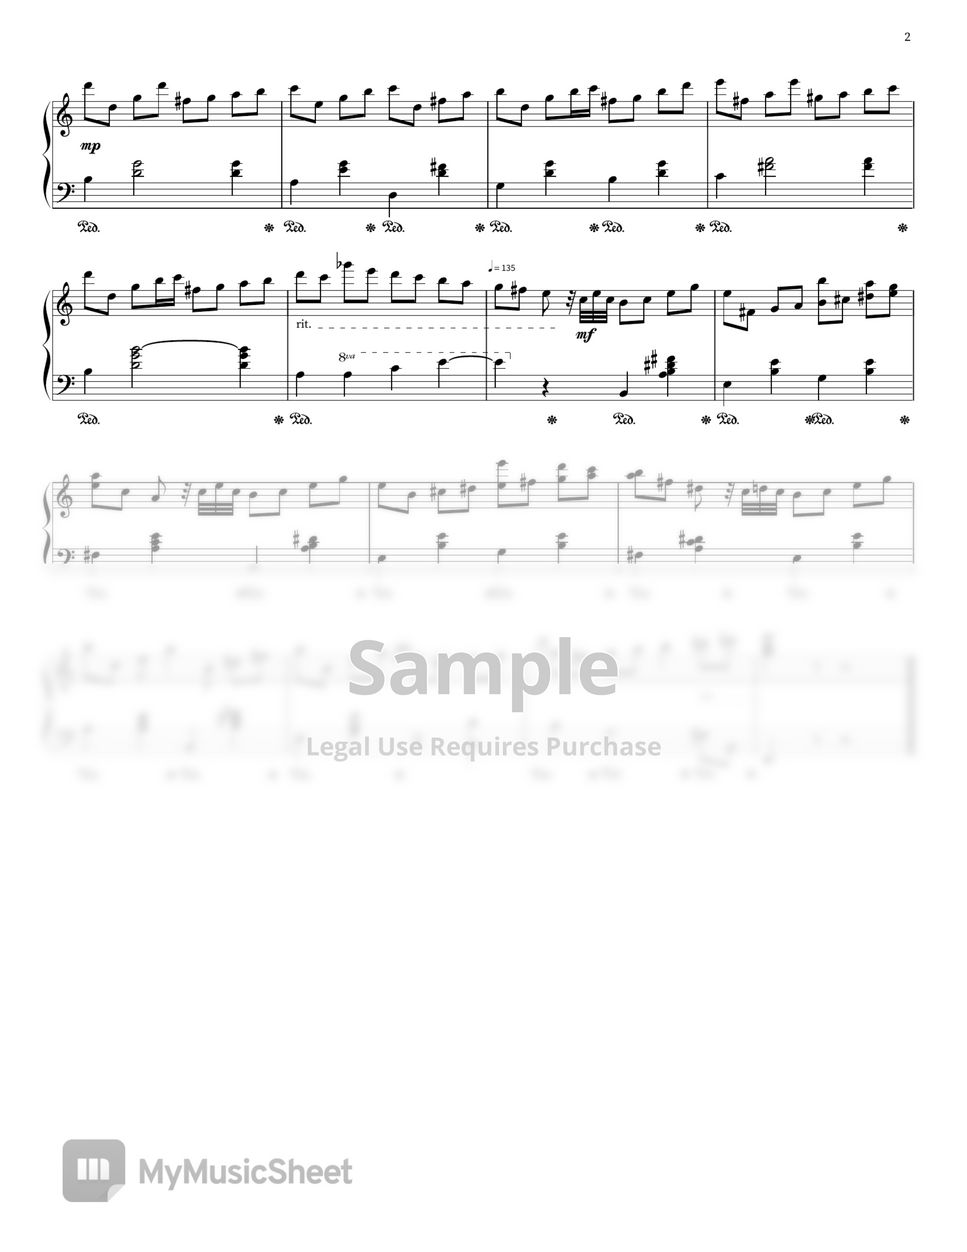 N. Tcherepnin - Paquita Jewel Variation by Caazi Piano Sheets